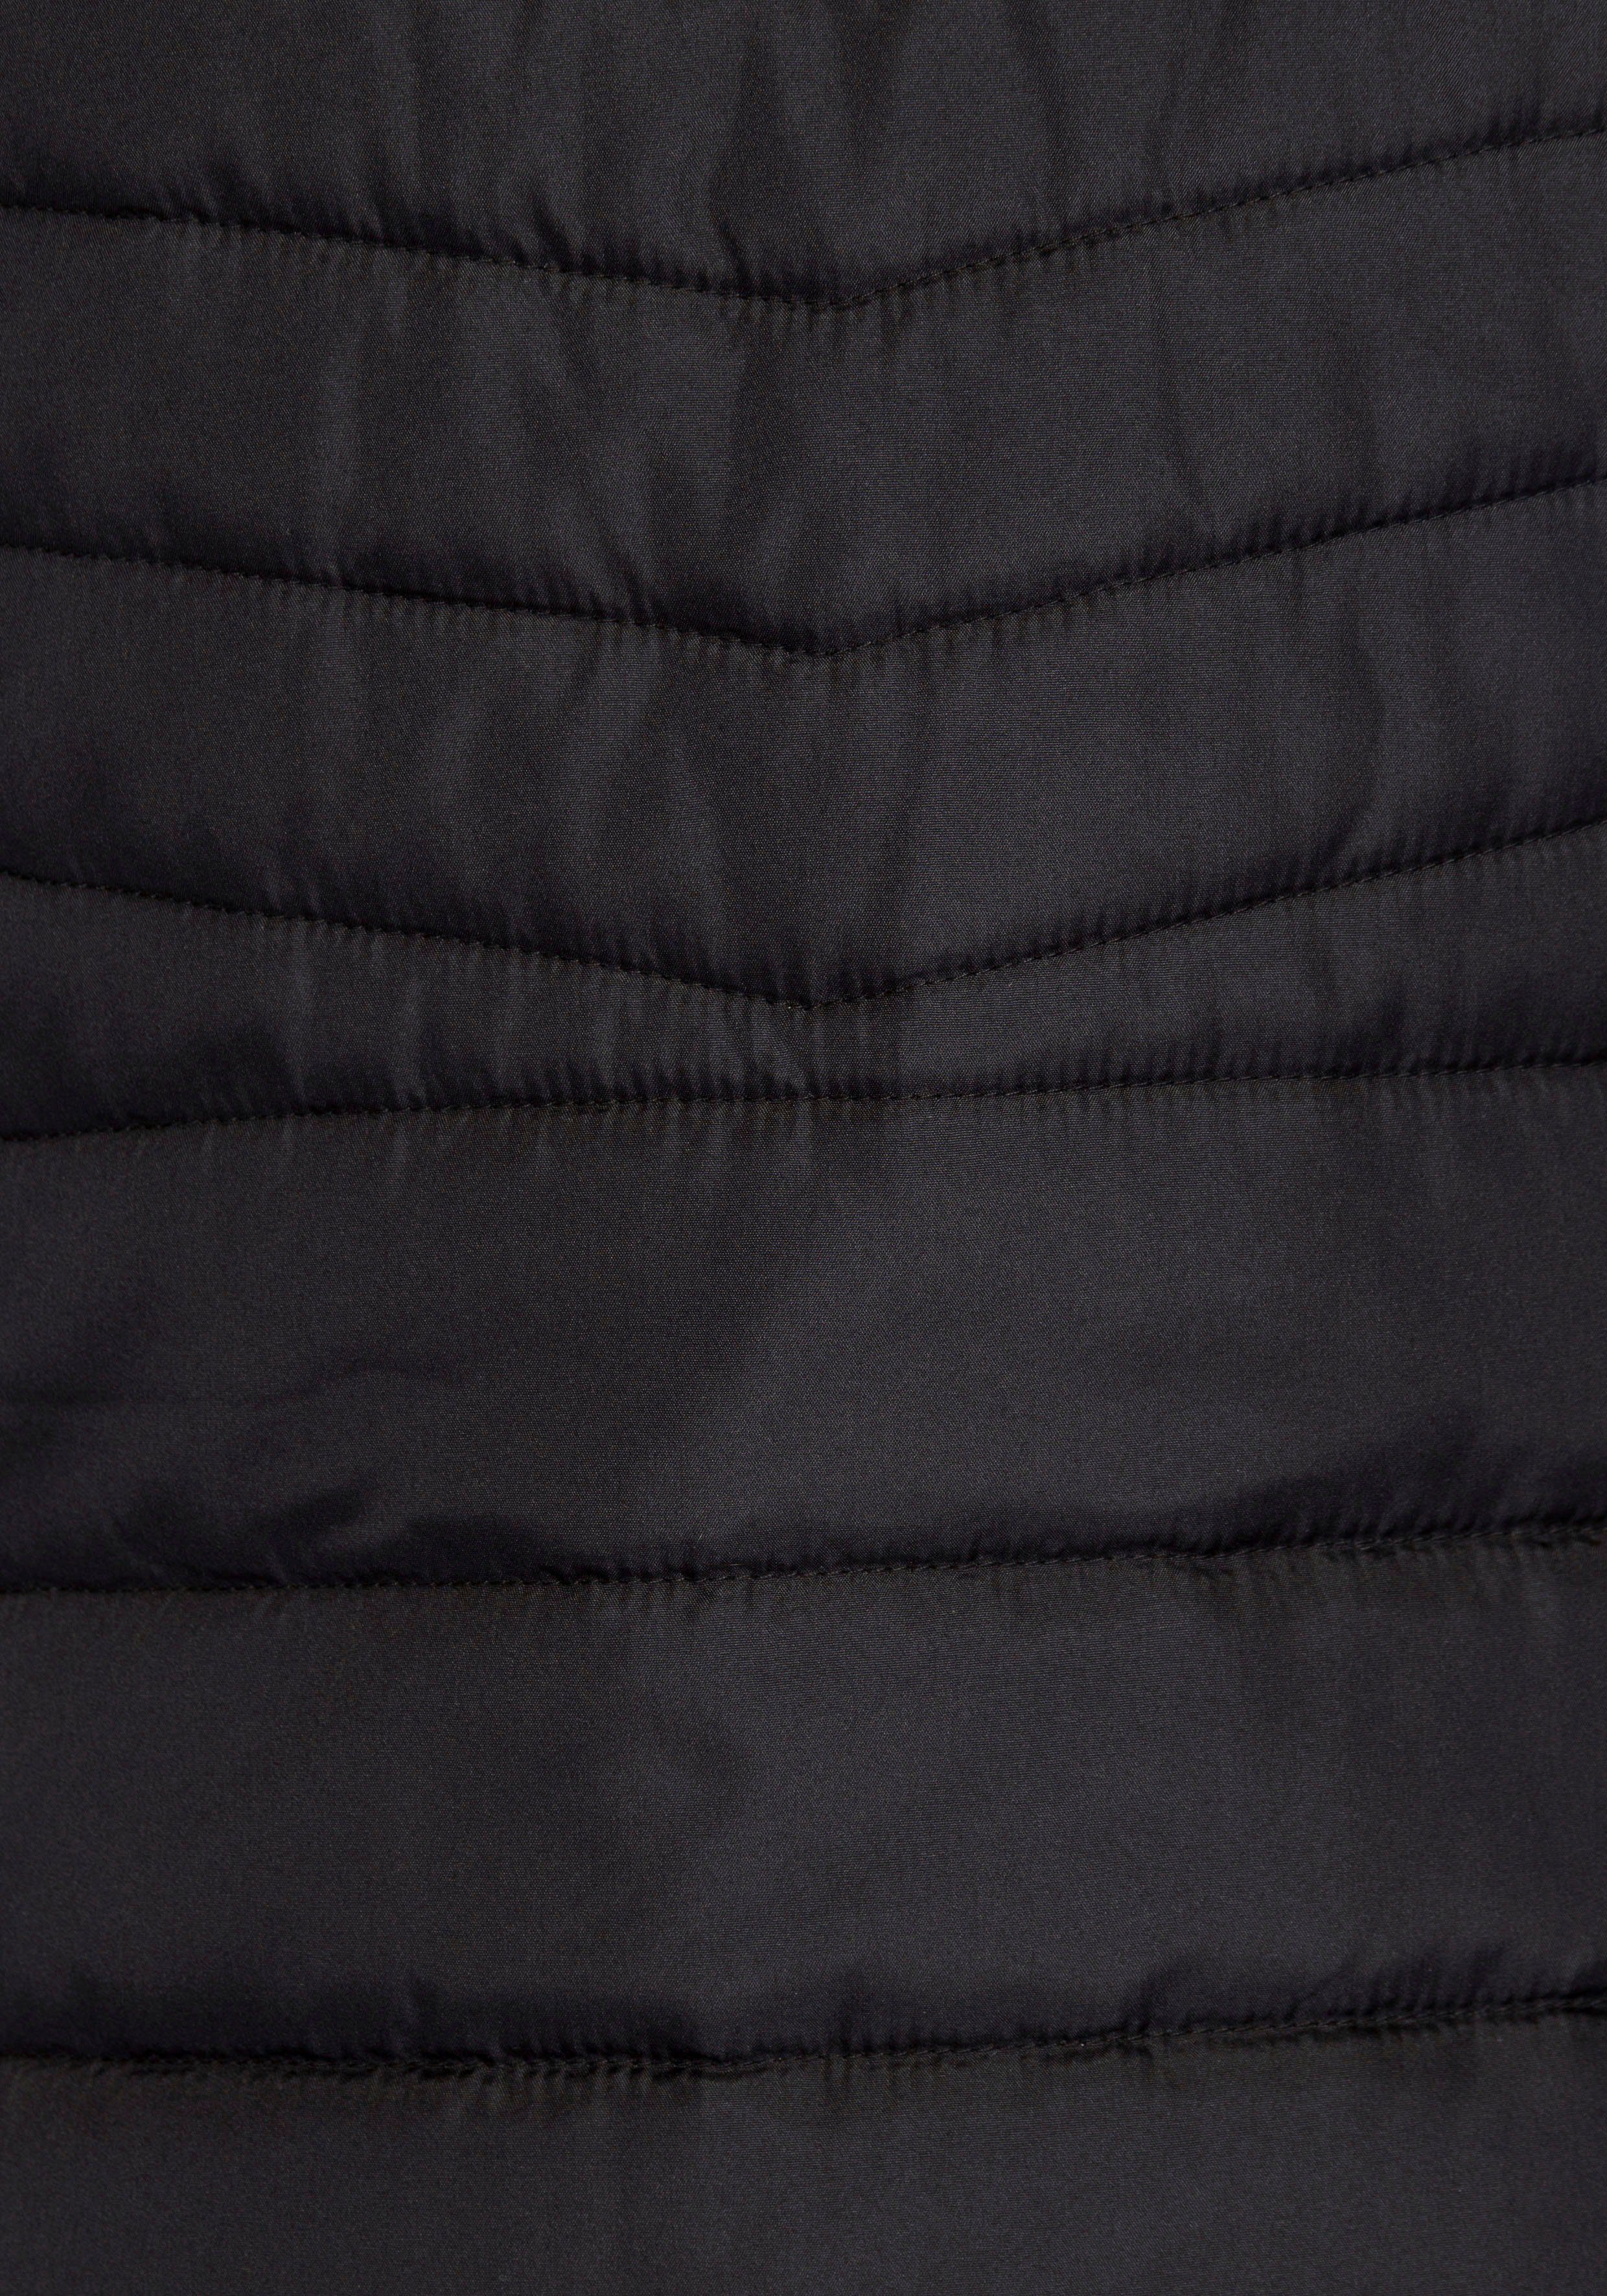 KangaROOS Langjacke im aus Materialmix nachhaltigem modischen schwarz (Steppjacke Material)